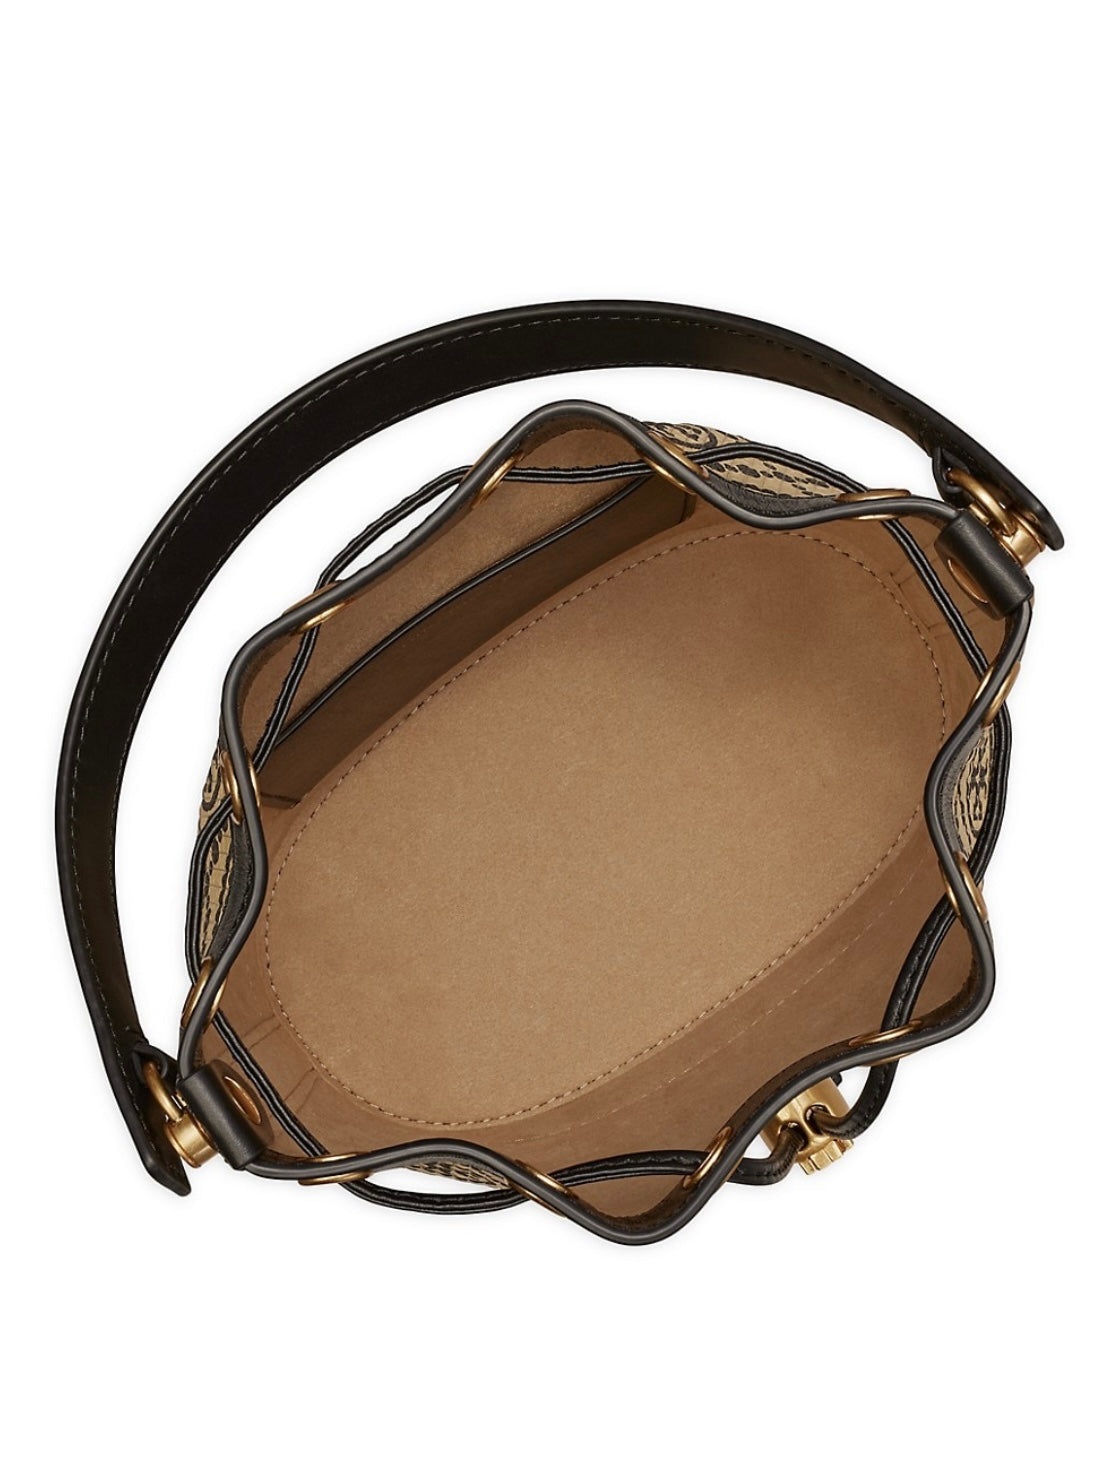 Tory Burch T Monogram Raffia Bucket Bag, Black/ Brass, Style 139129, Retail $598